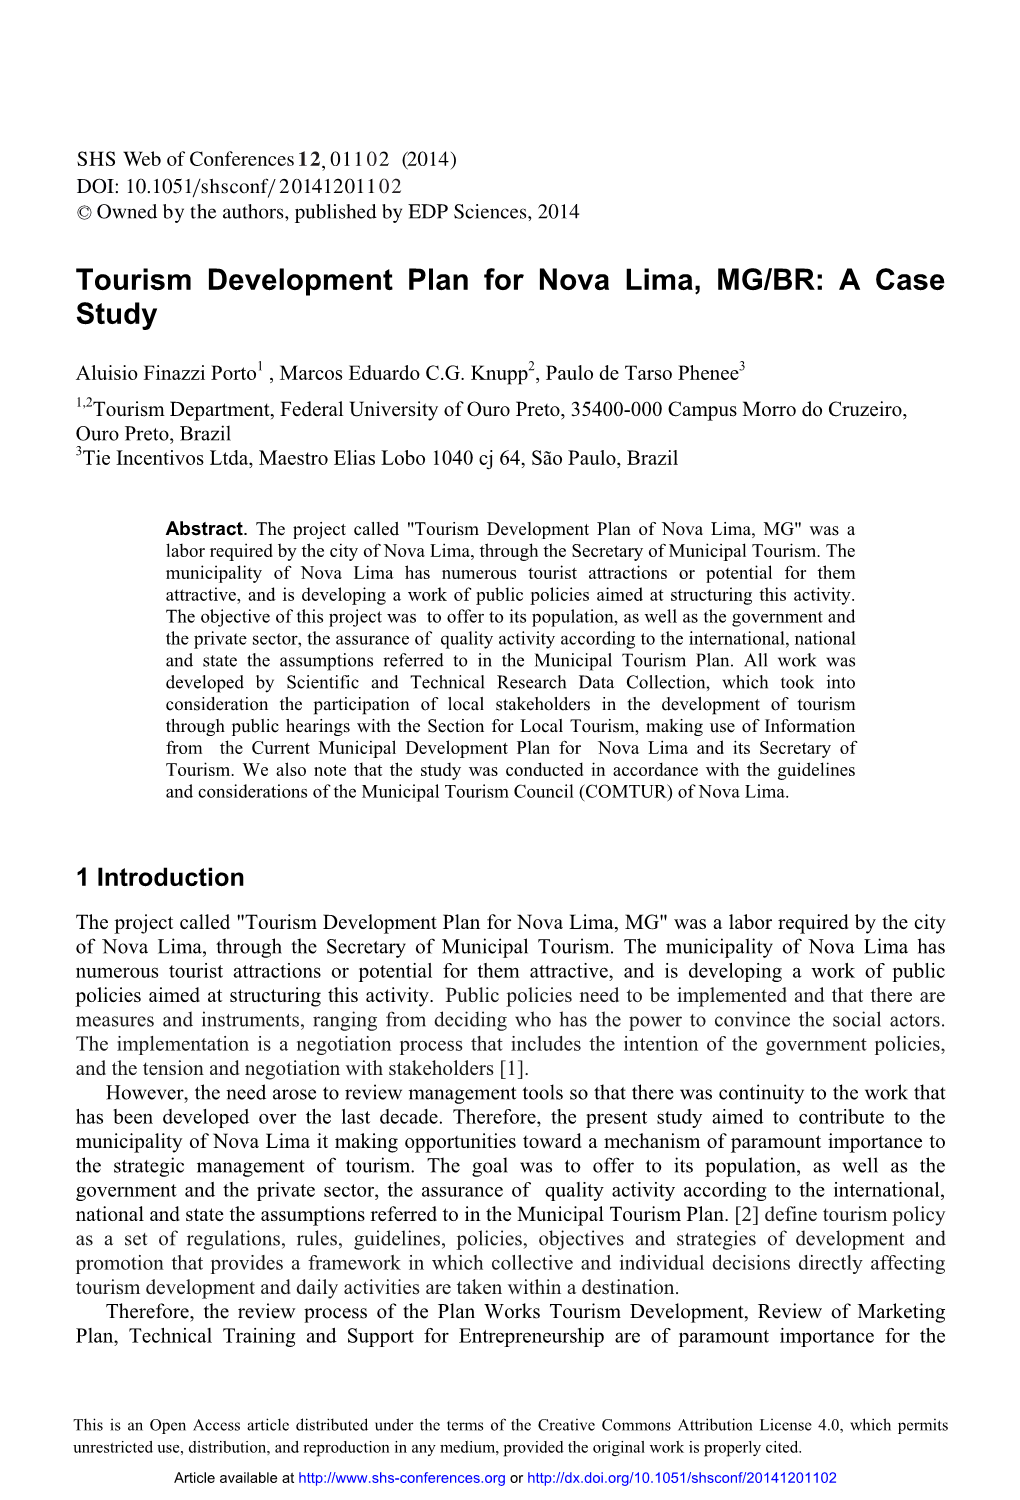 Tourism Development Plan for Nova Lima, MG/BR: a Case Study